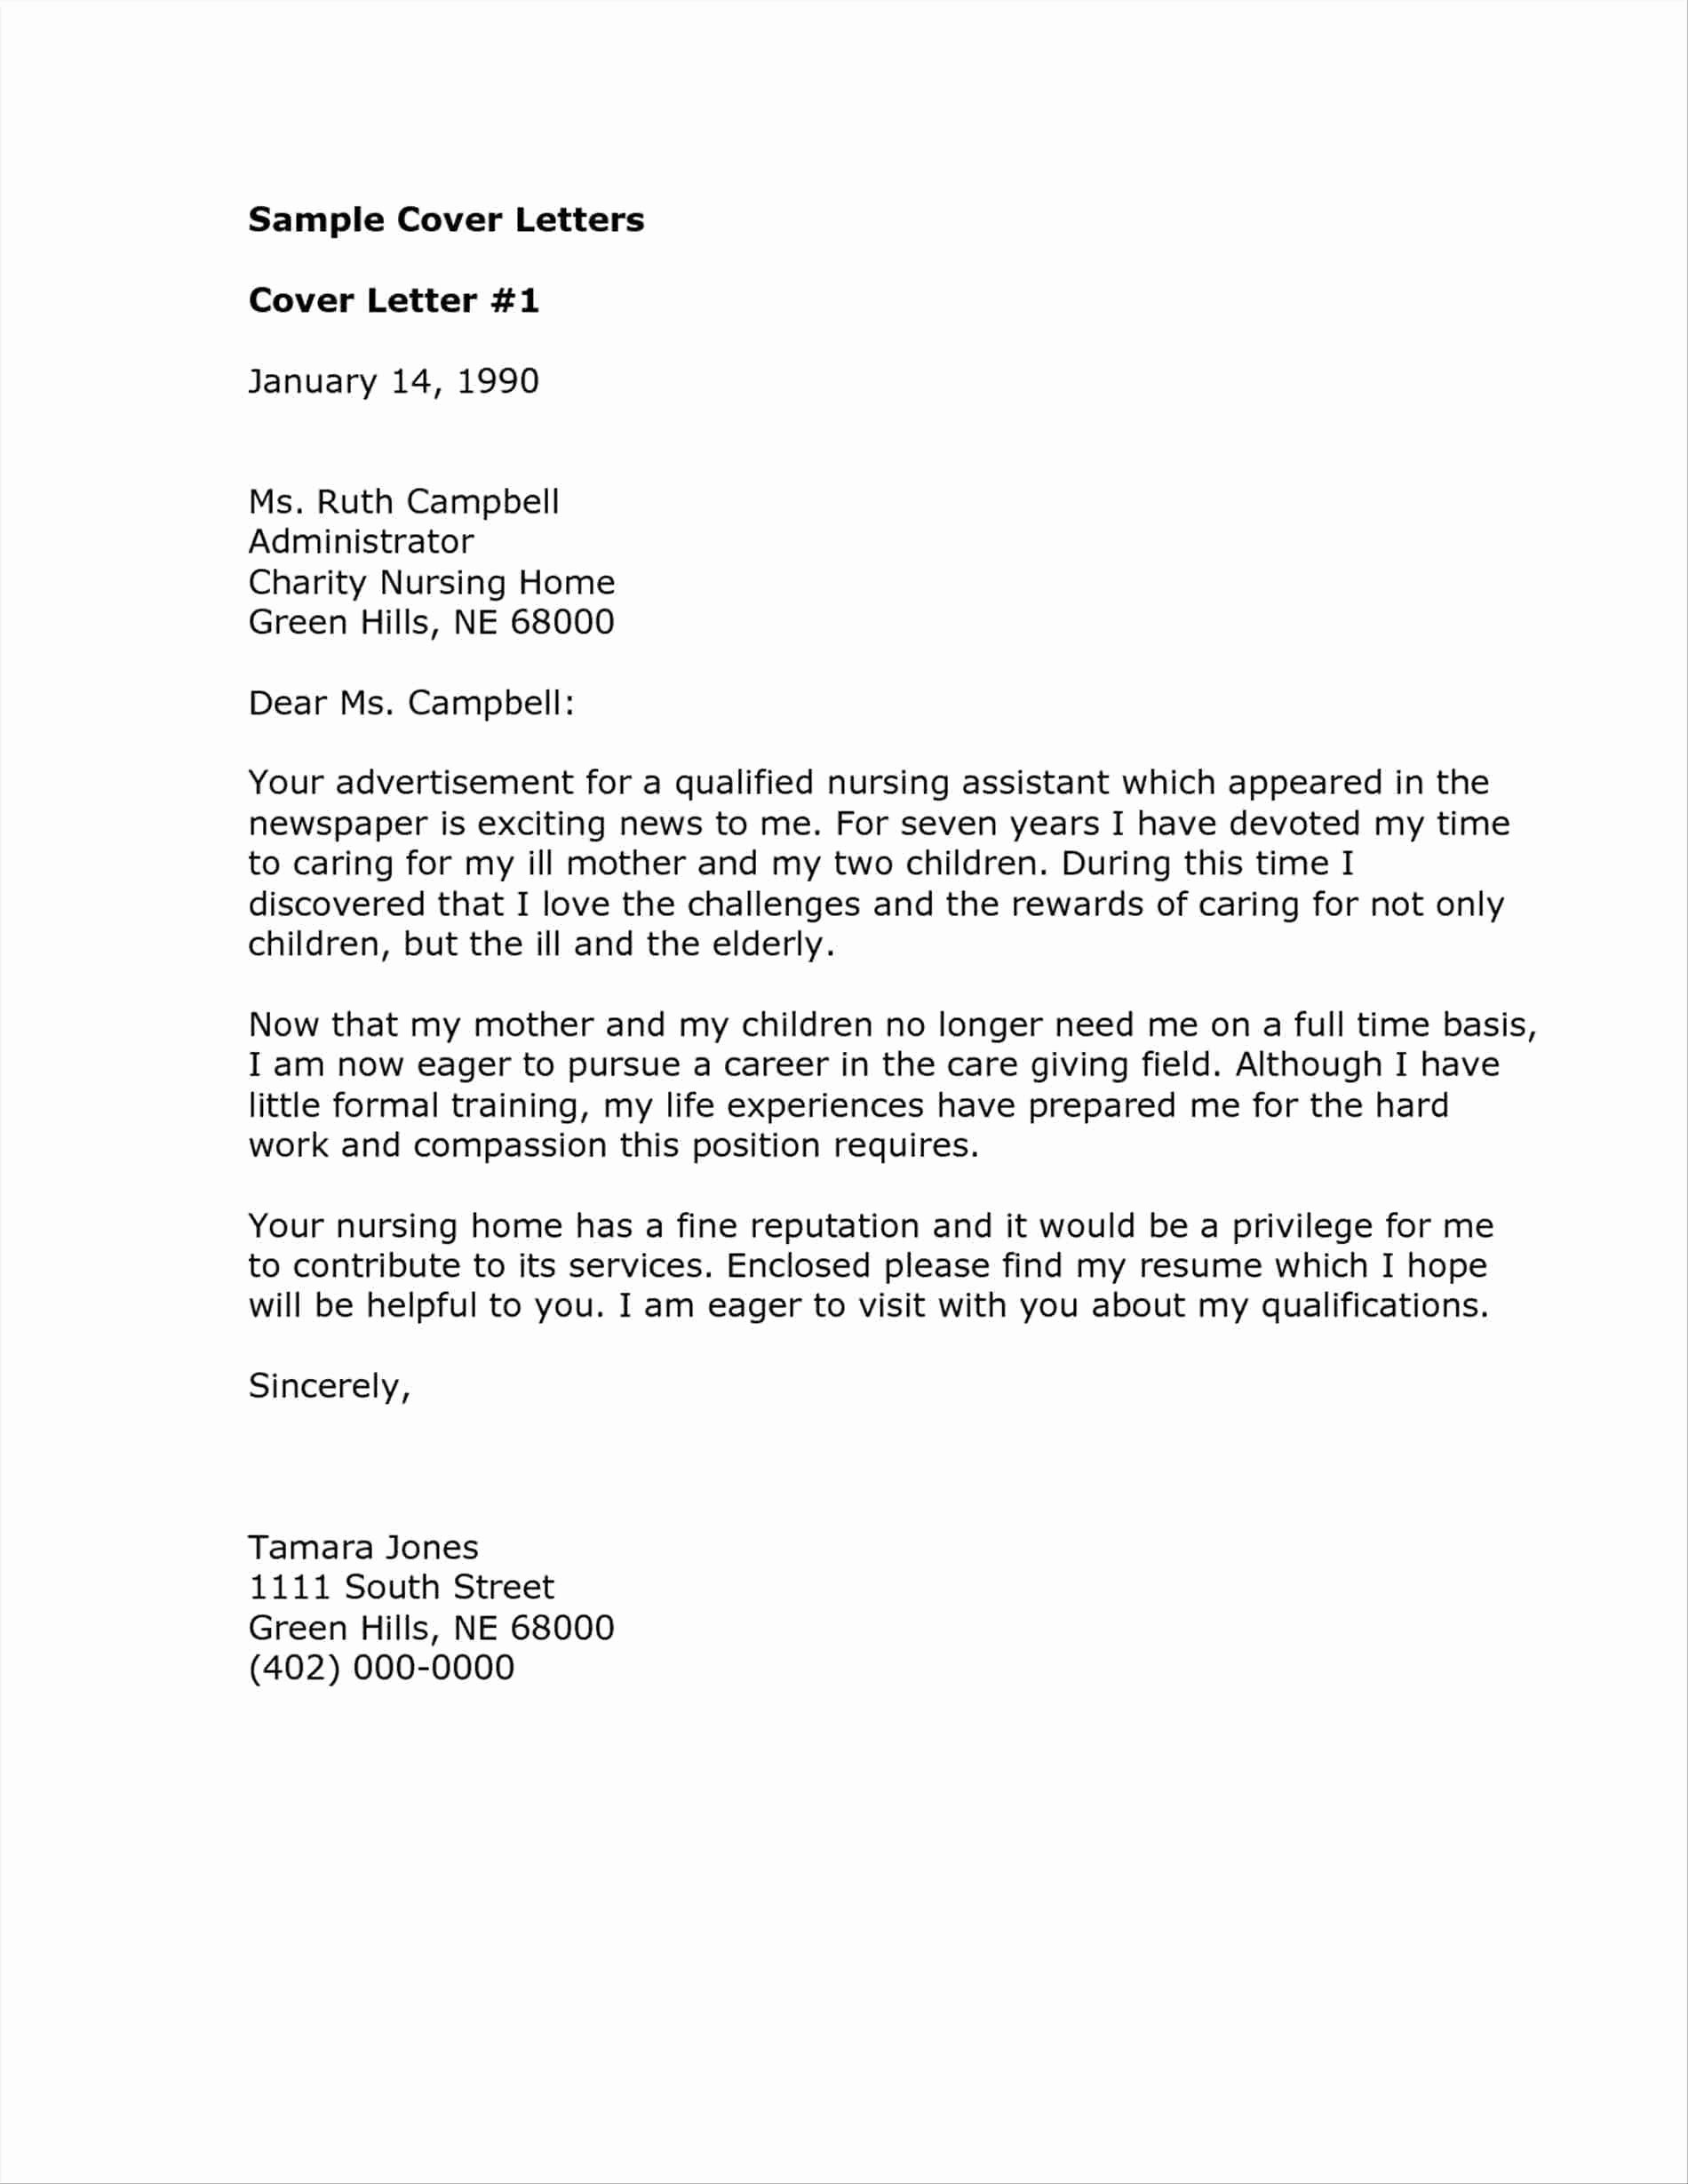 Sample Cover Letter for Lpn